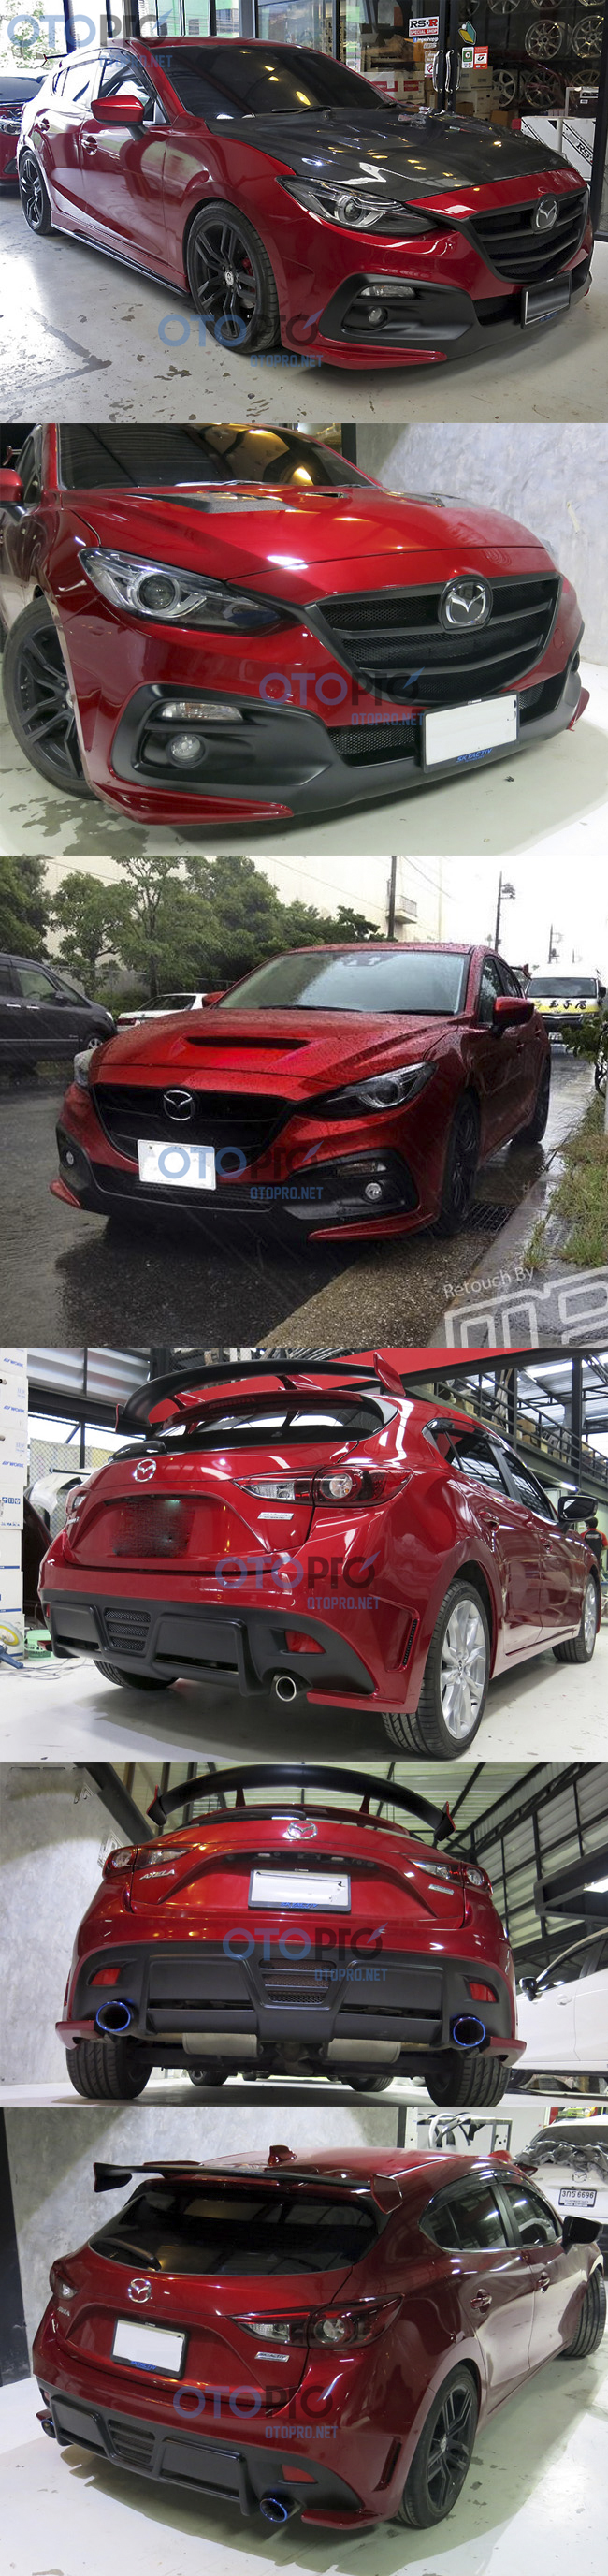 Bodykits cho xe Mazda 3 Hatchback AllNew mẫu Knight Sport